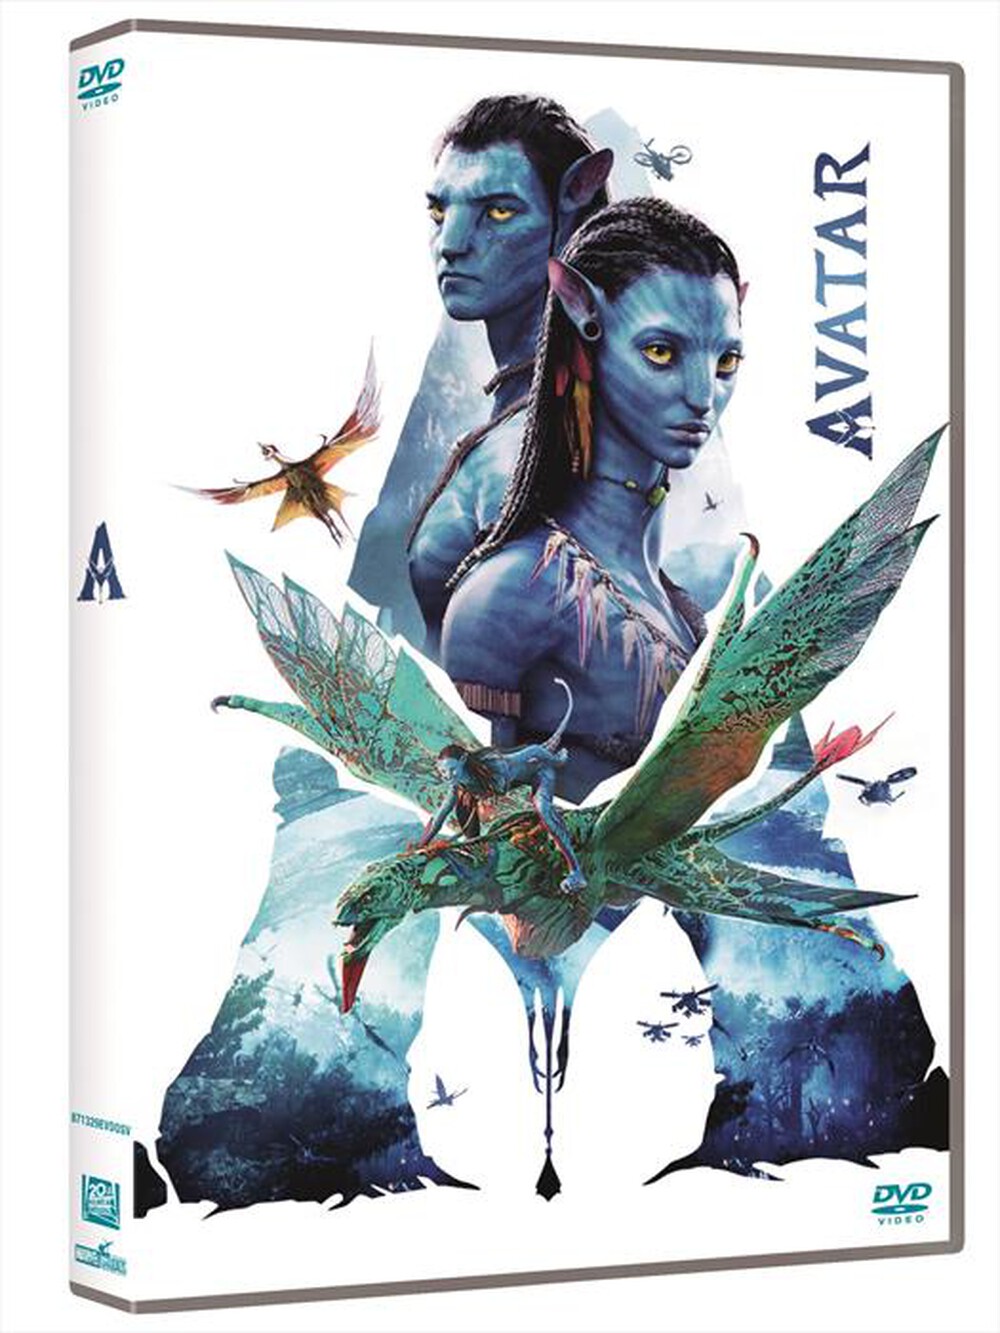 "WALT DISNEY - Avatar (Remastered)"